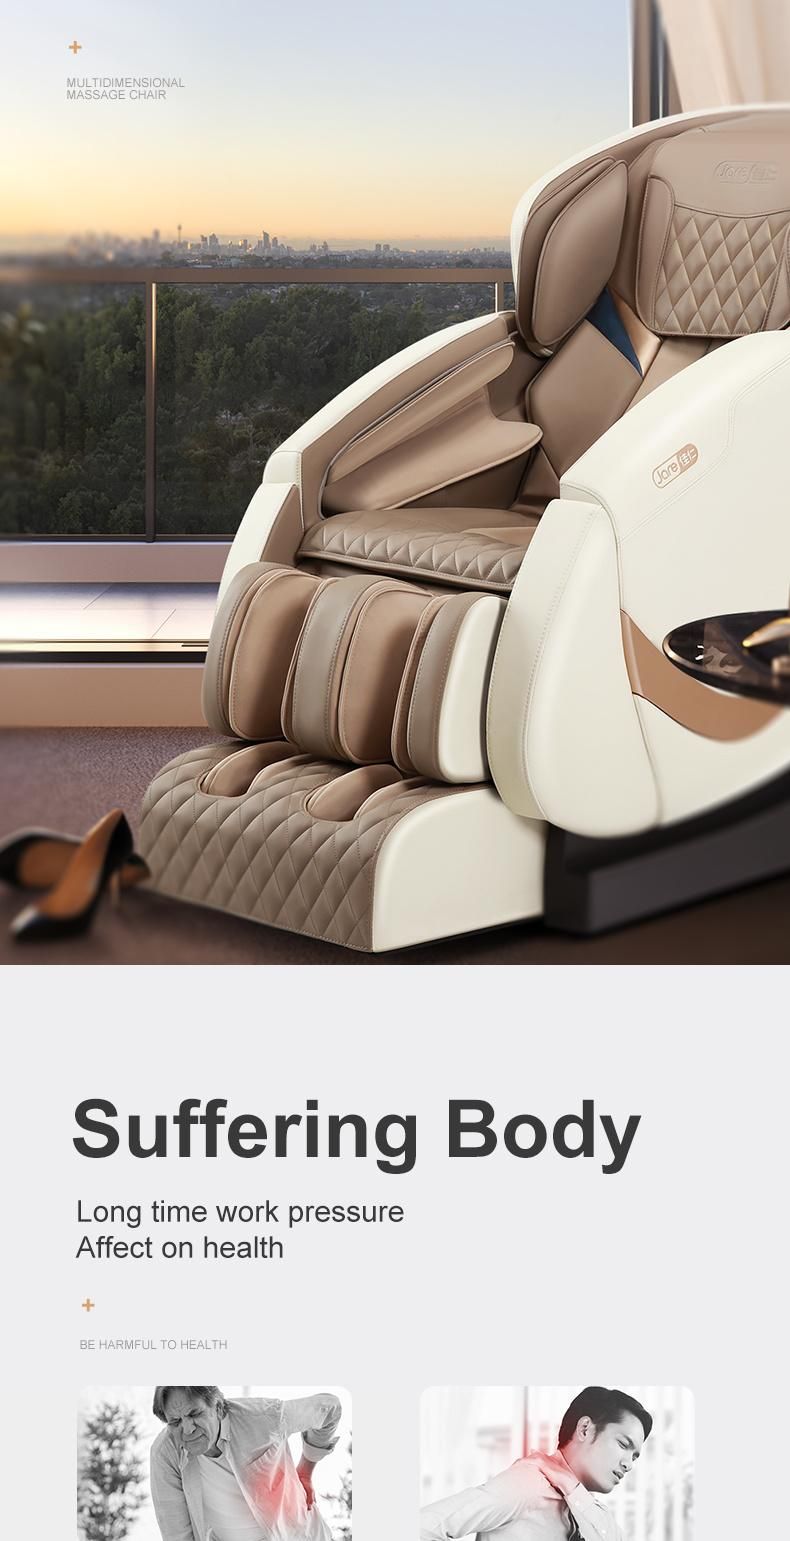 Jare V8 Luxury Automatic Shiatsu Kneading Cheap New Design Electric Zero Gravity Heated Home Body Care 4D Massage Chair